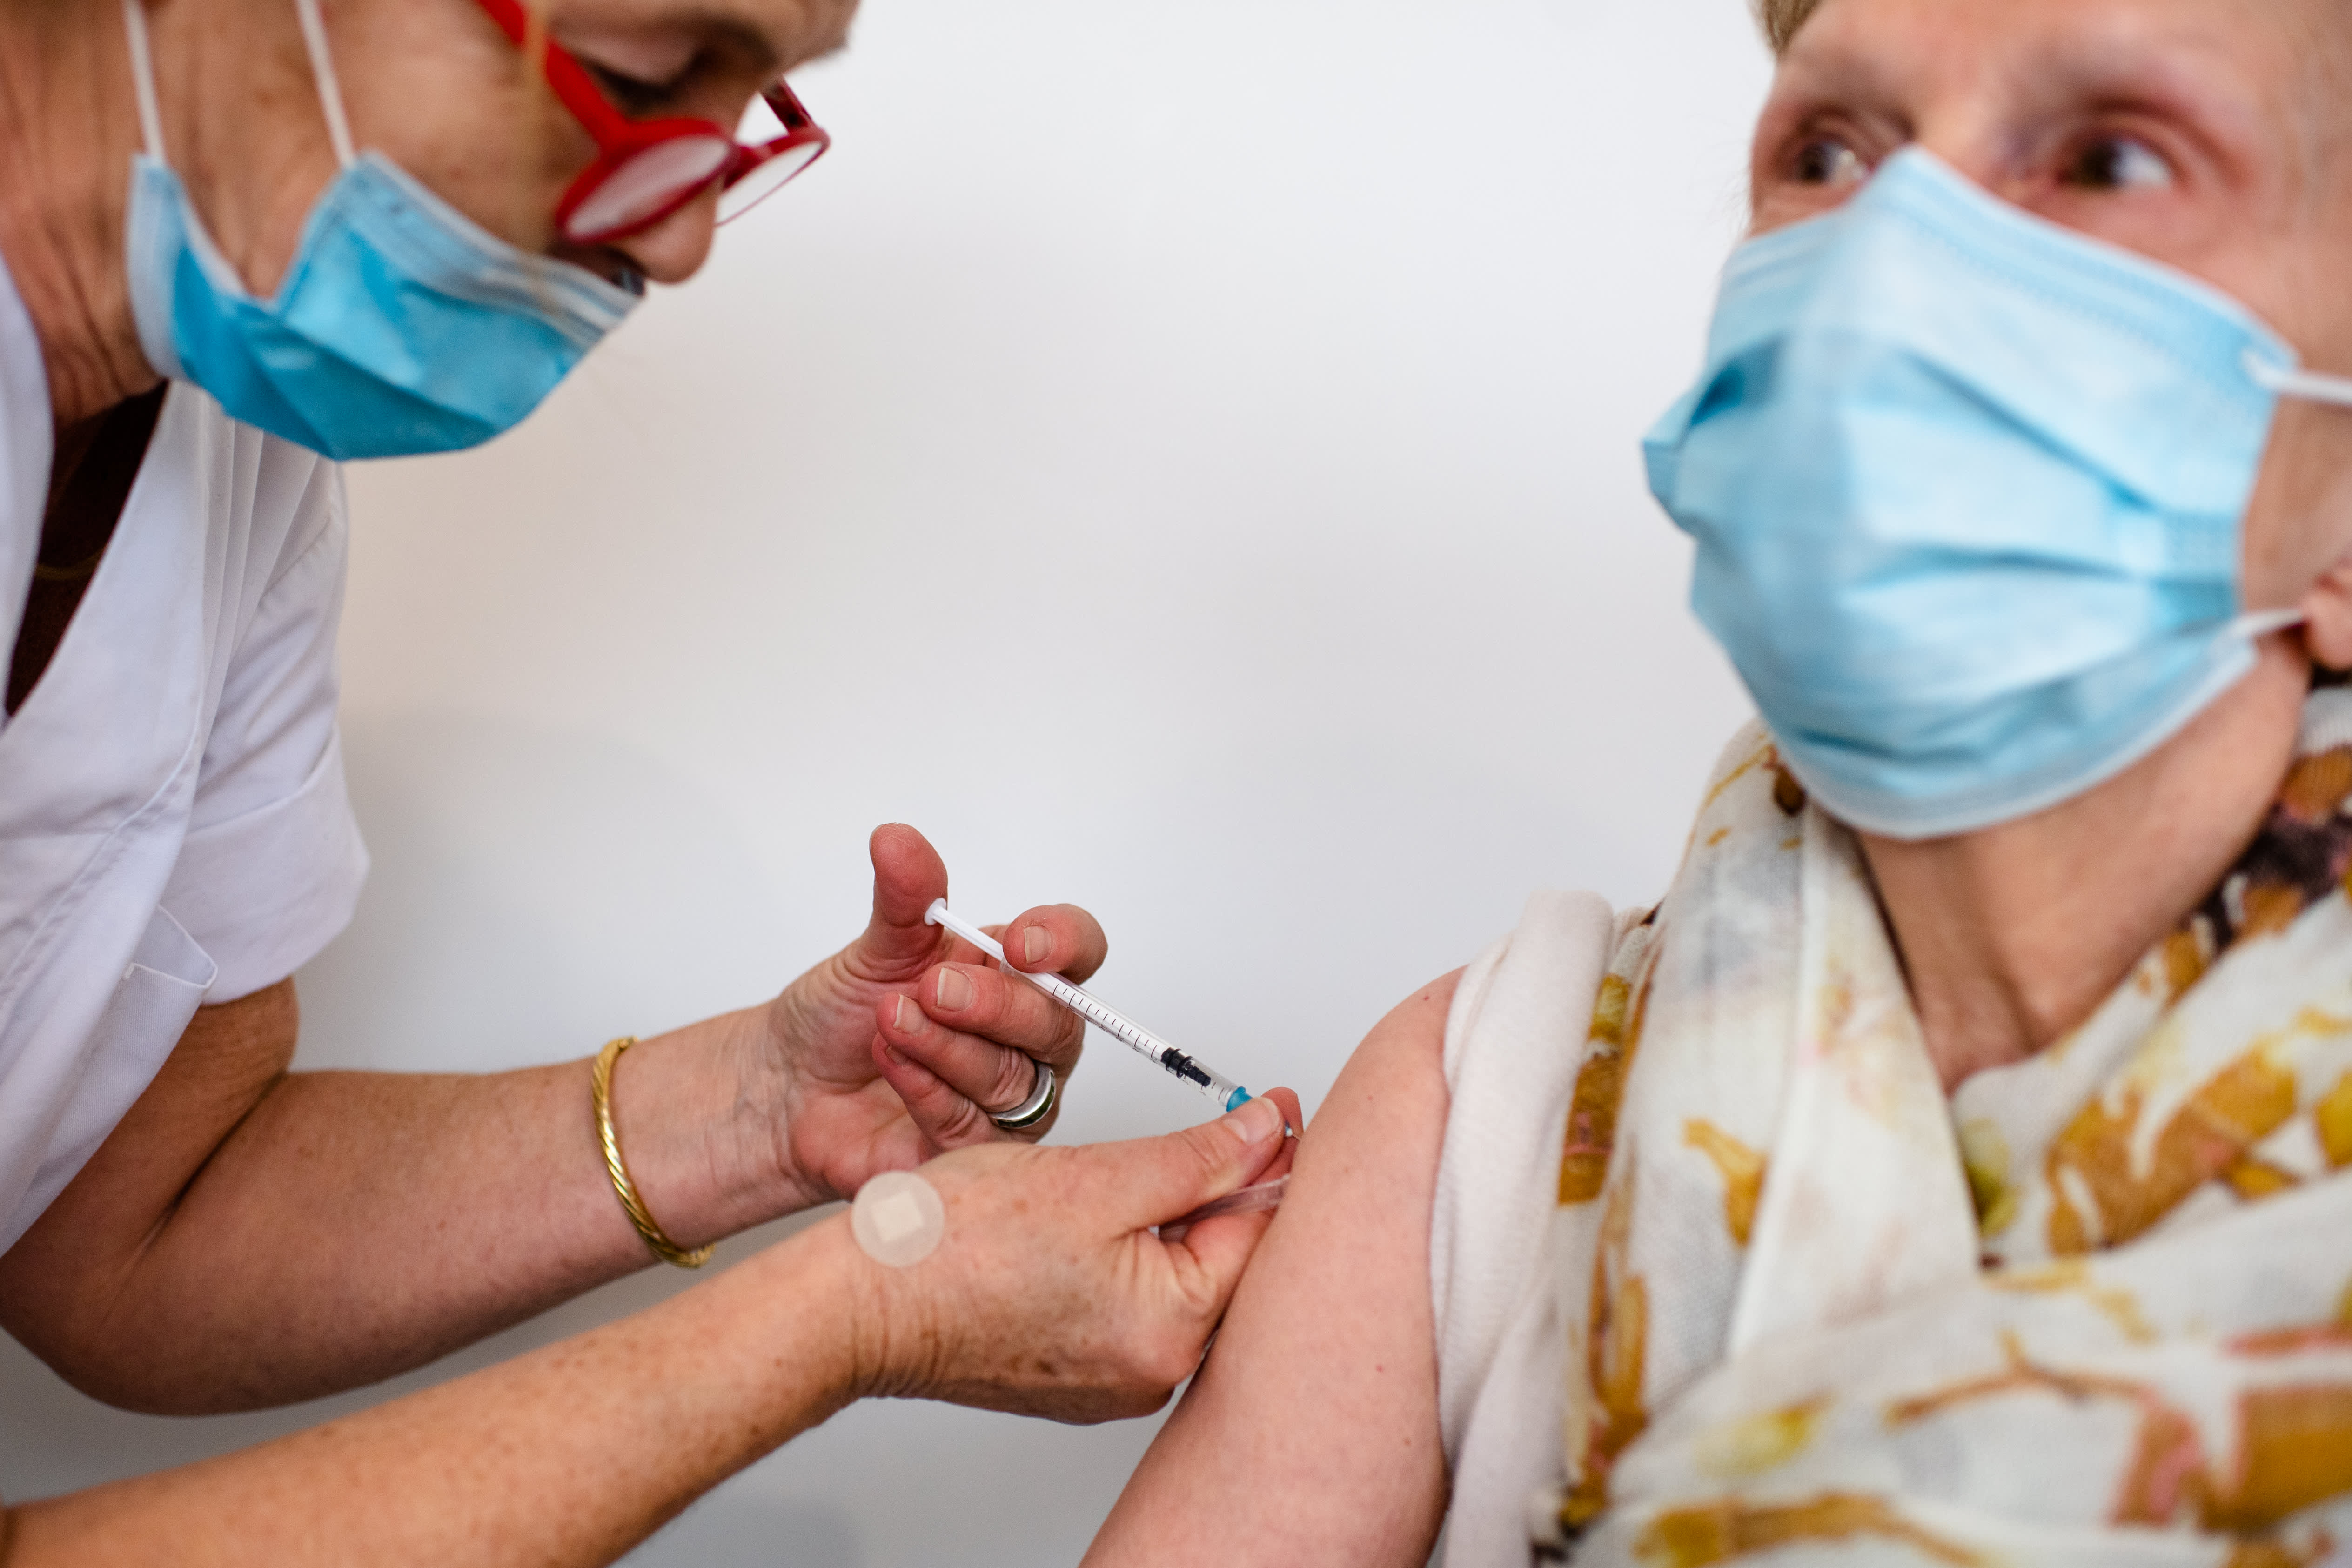 EU announces stricter controls on coronavirus vaccine exports